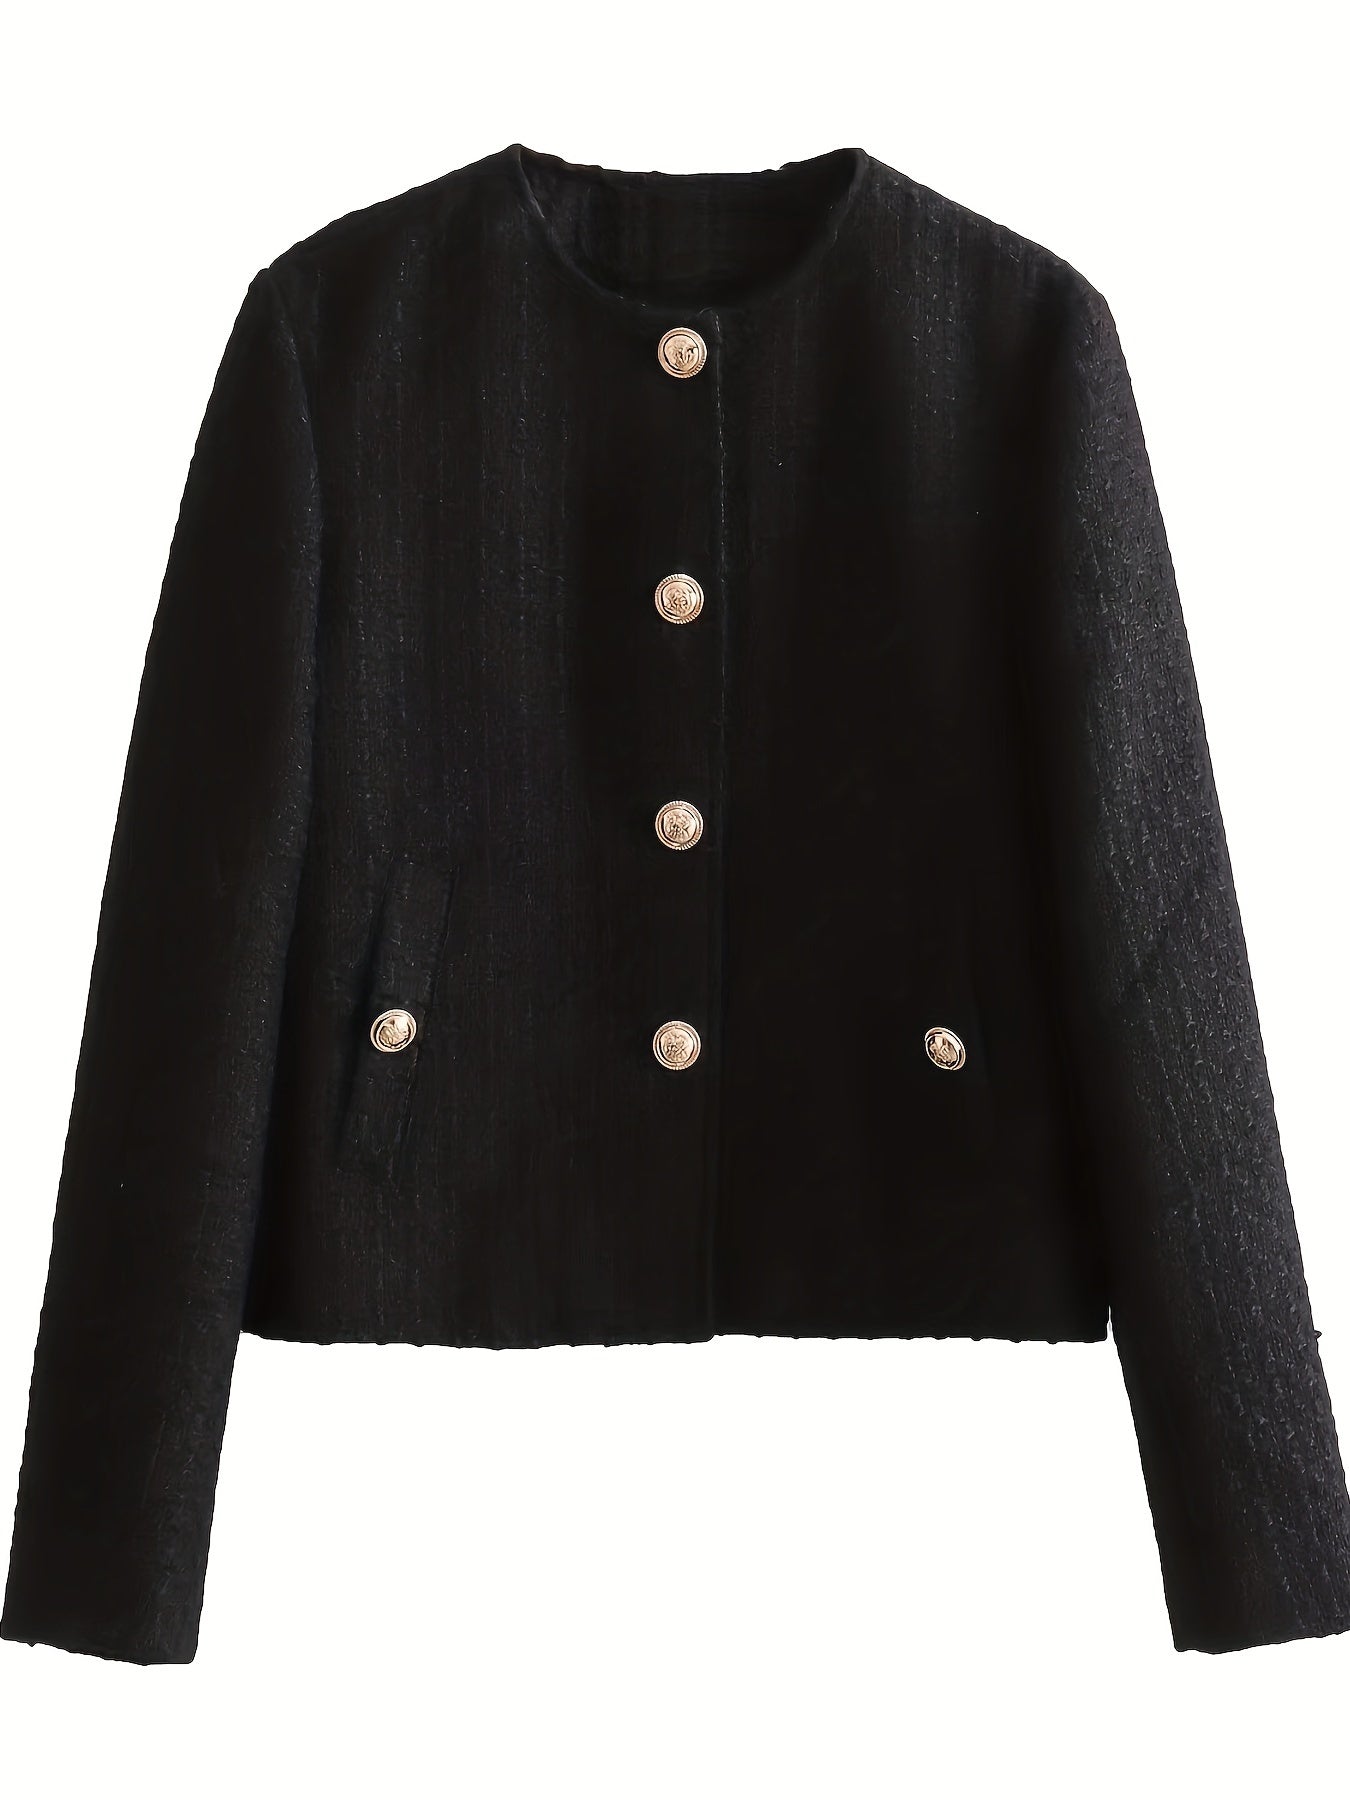 Vzyzv Solid Single Breasted Jacket, Elegant Long Sleeve Outwear For Fall & Winter, Women's Clothing